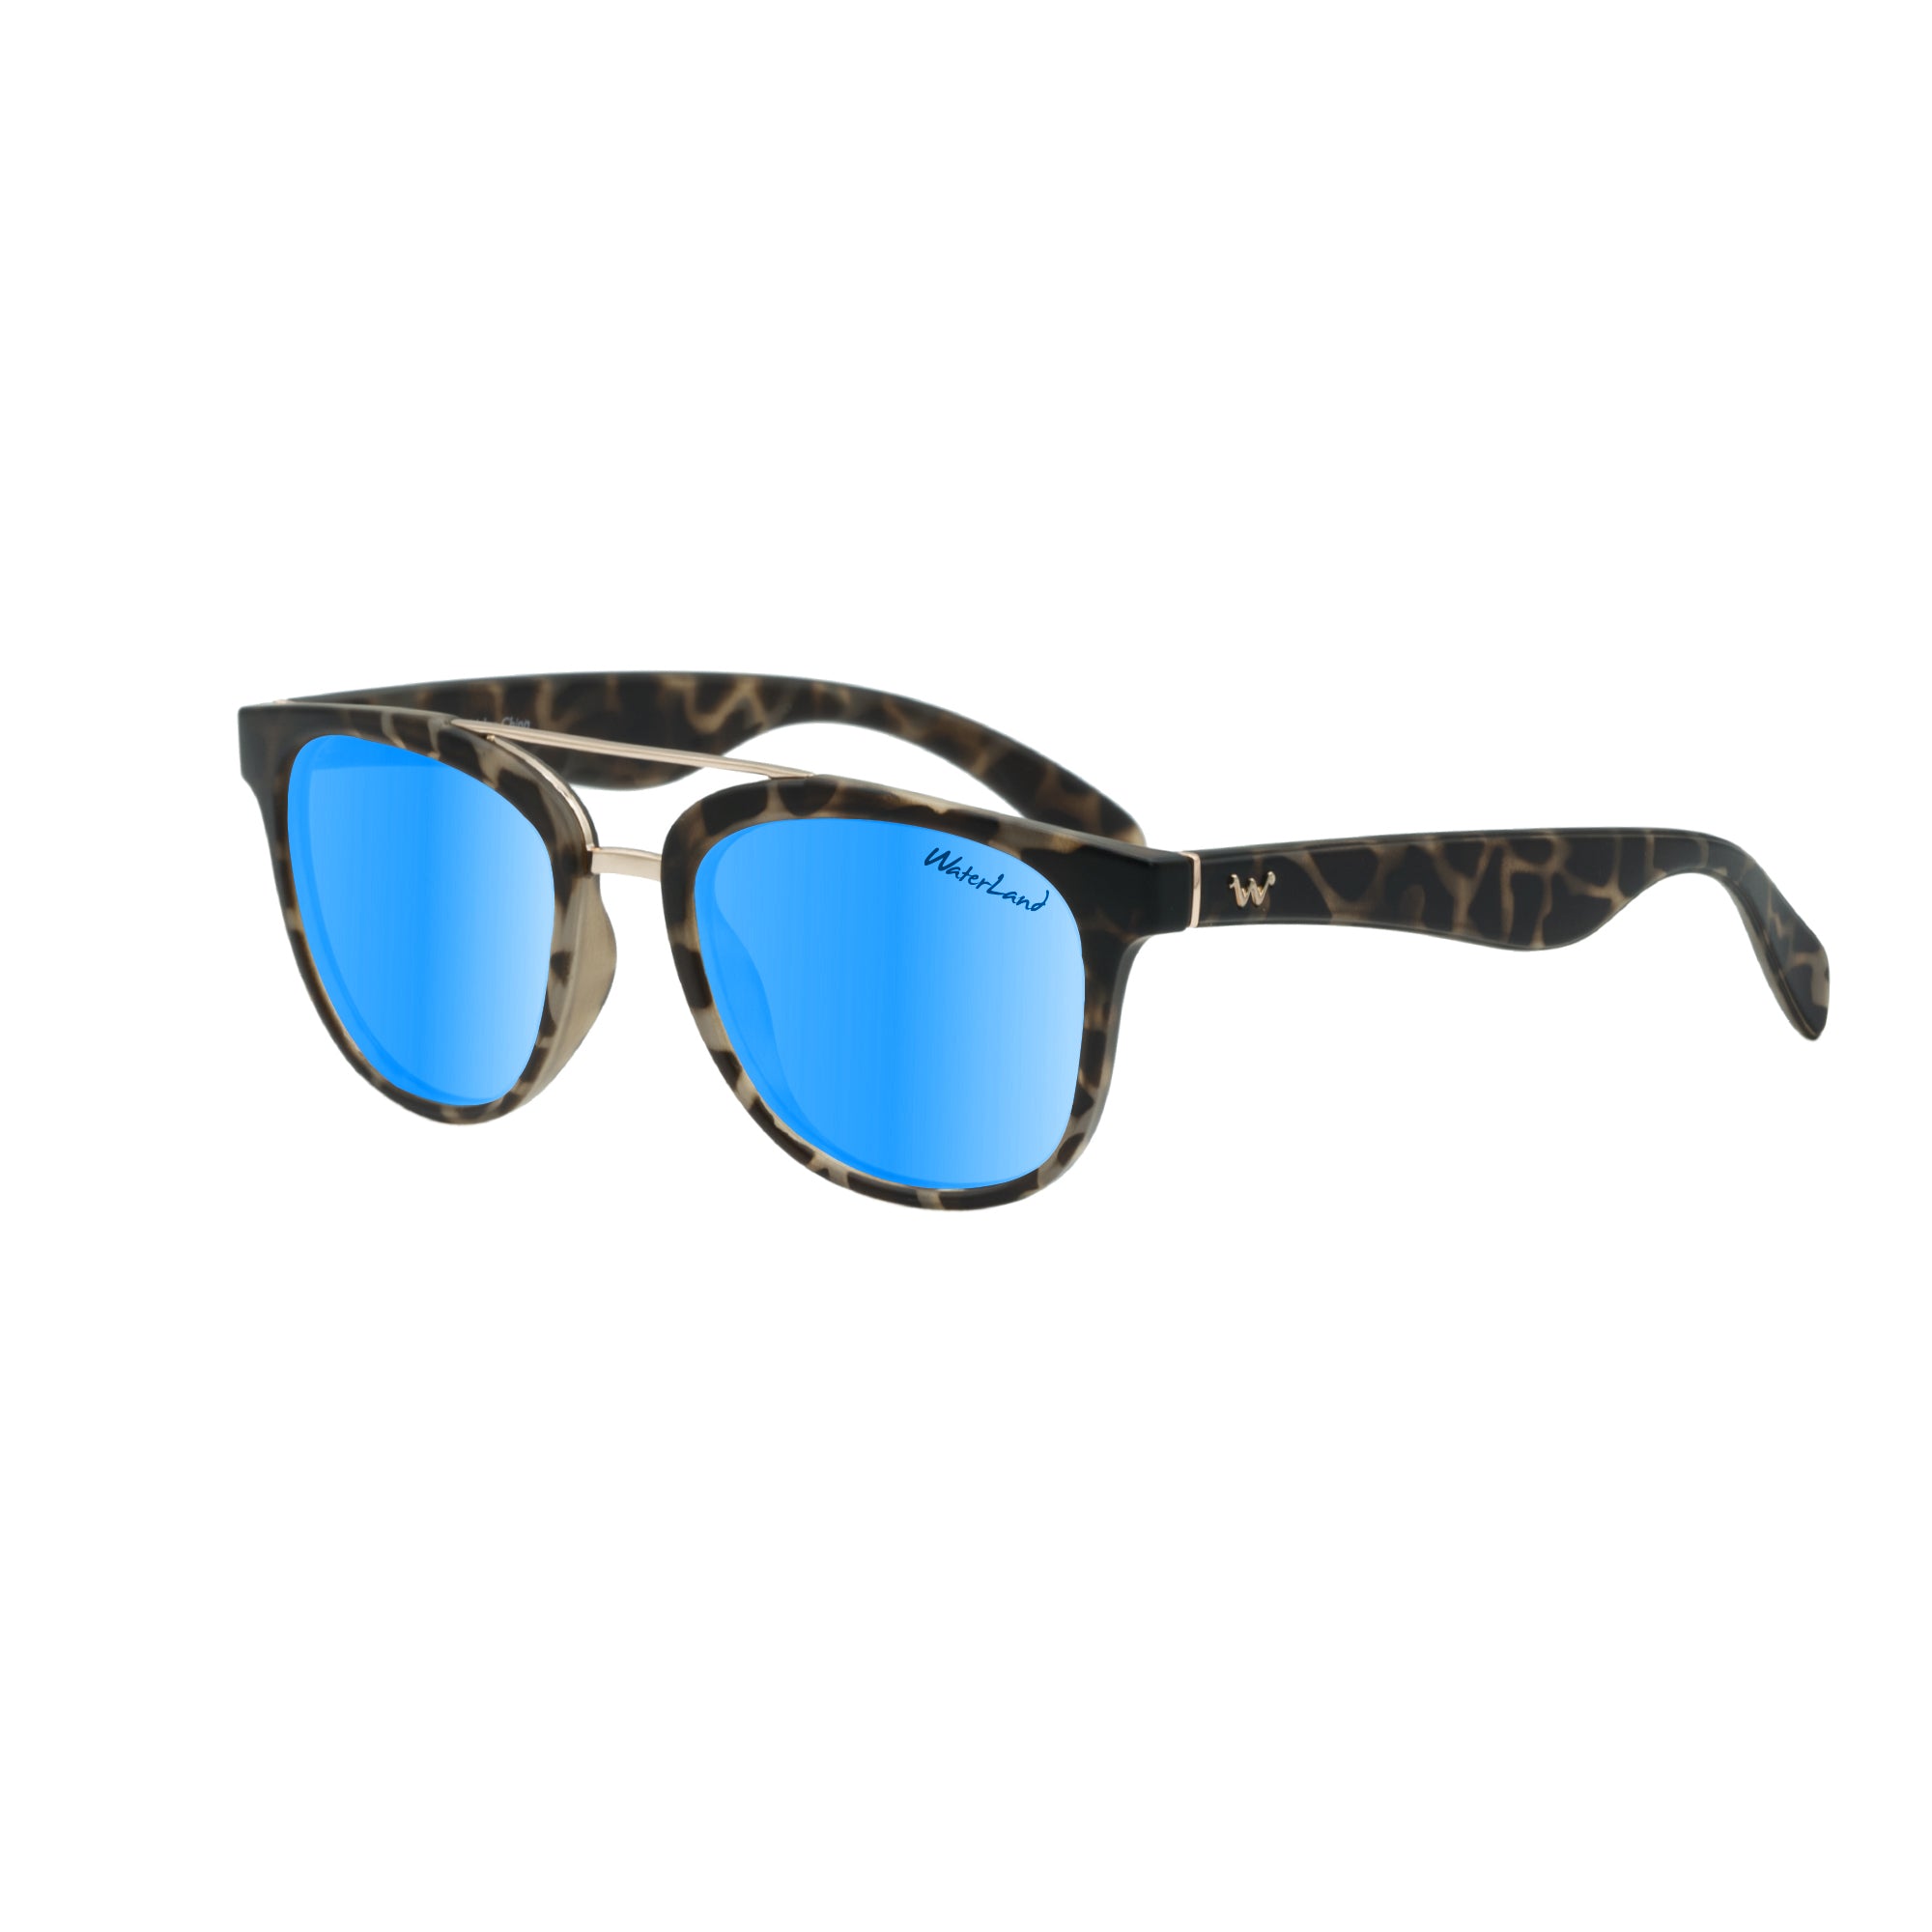 Waterland Polarized Sunglasses - Jeune Prescription Series - Fawn Tortoise Blue Mirror